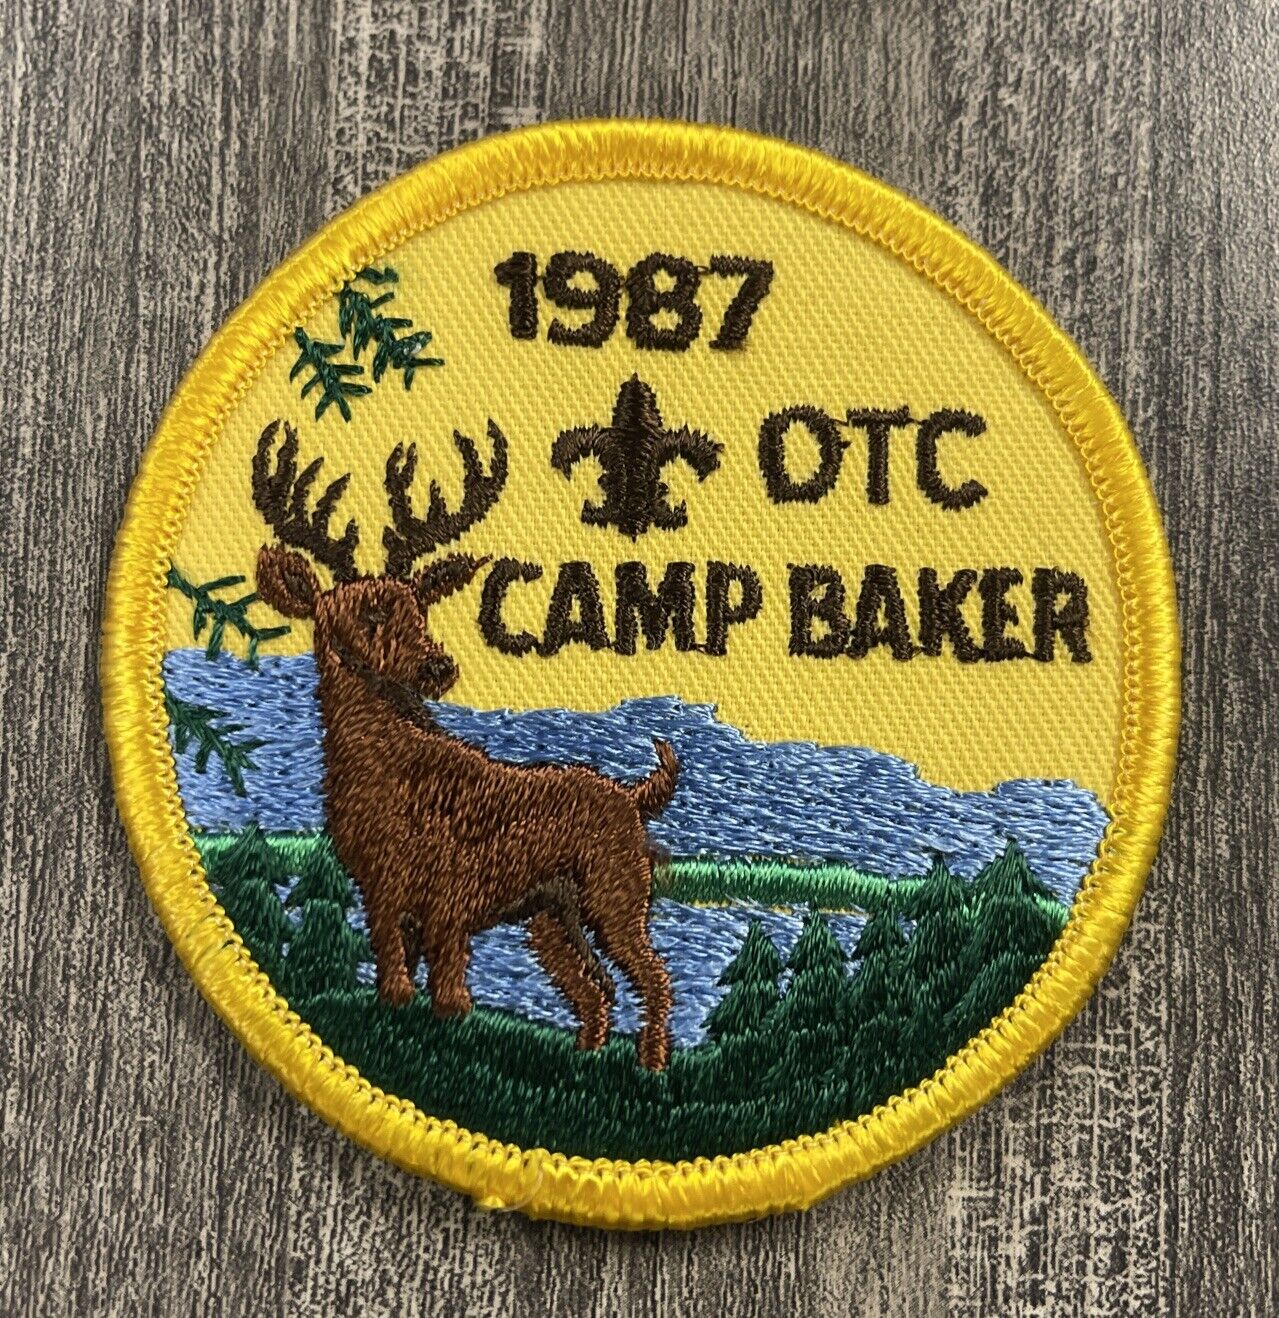 1987 OTC Camp Baker Shoulder Patch Boy Scouts Of America 3”